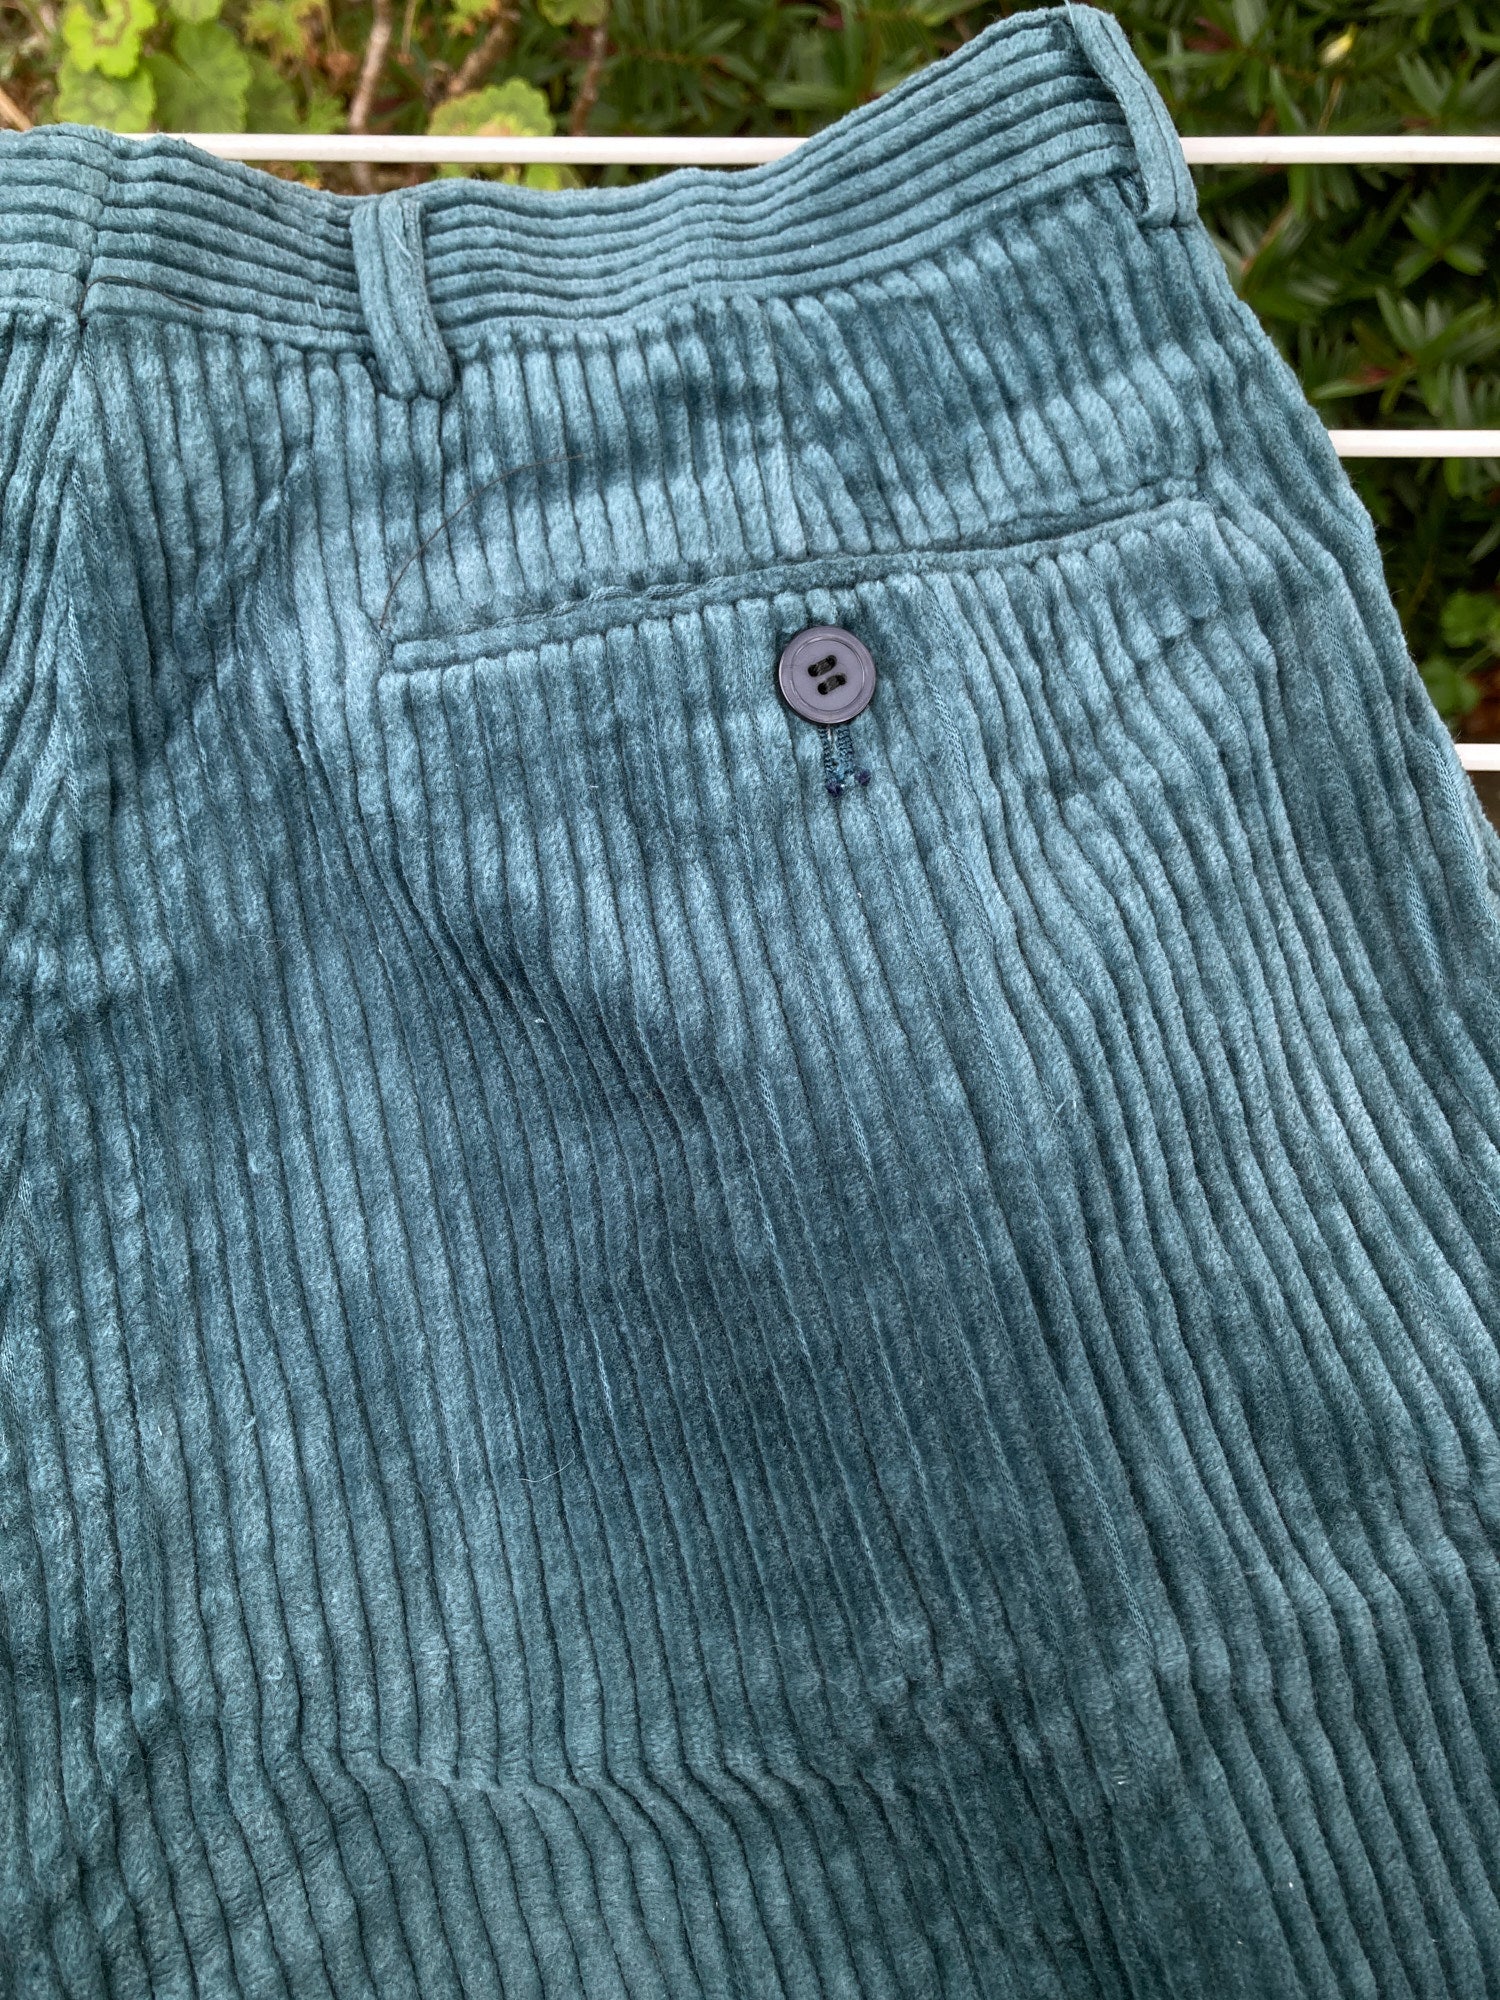 Kenzo Paris 1980s teal cotton corduroy pleated trousers - size 2 S XS